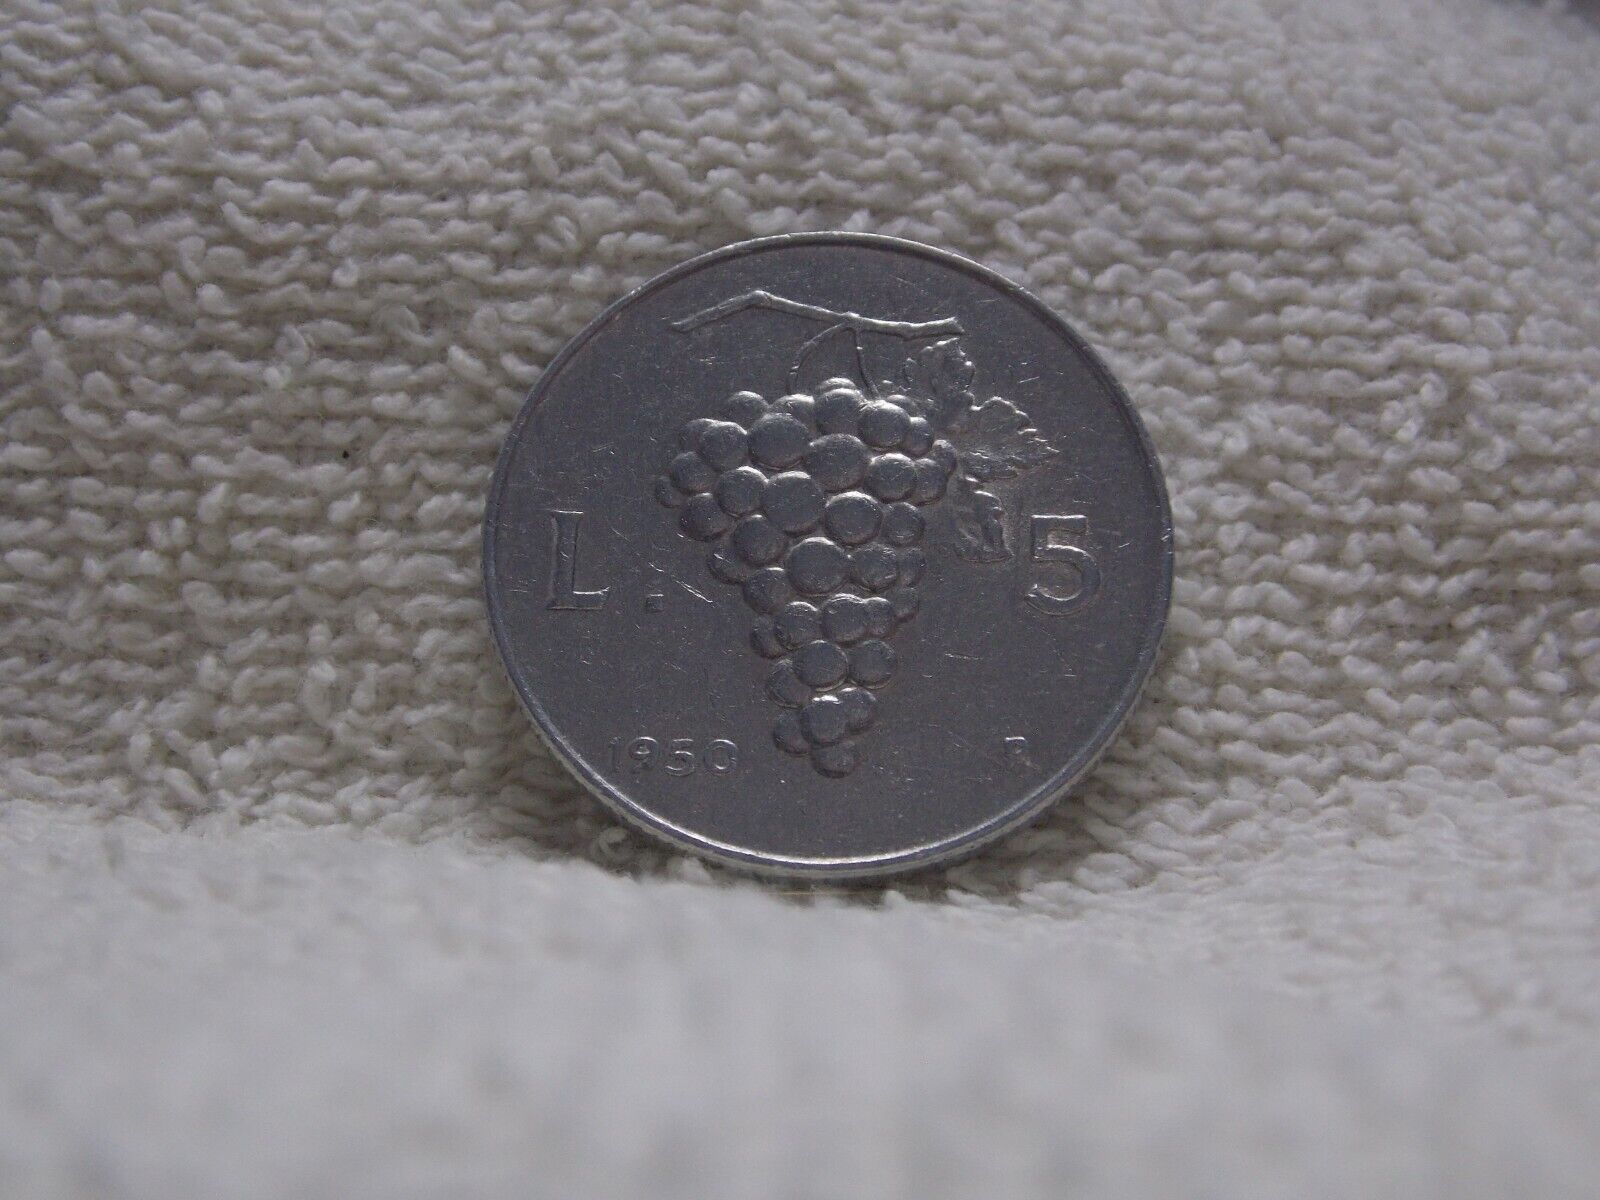 Italy coins Без бренда - фотография #2